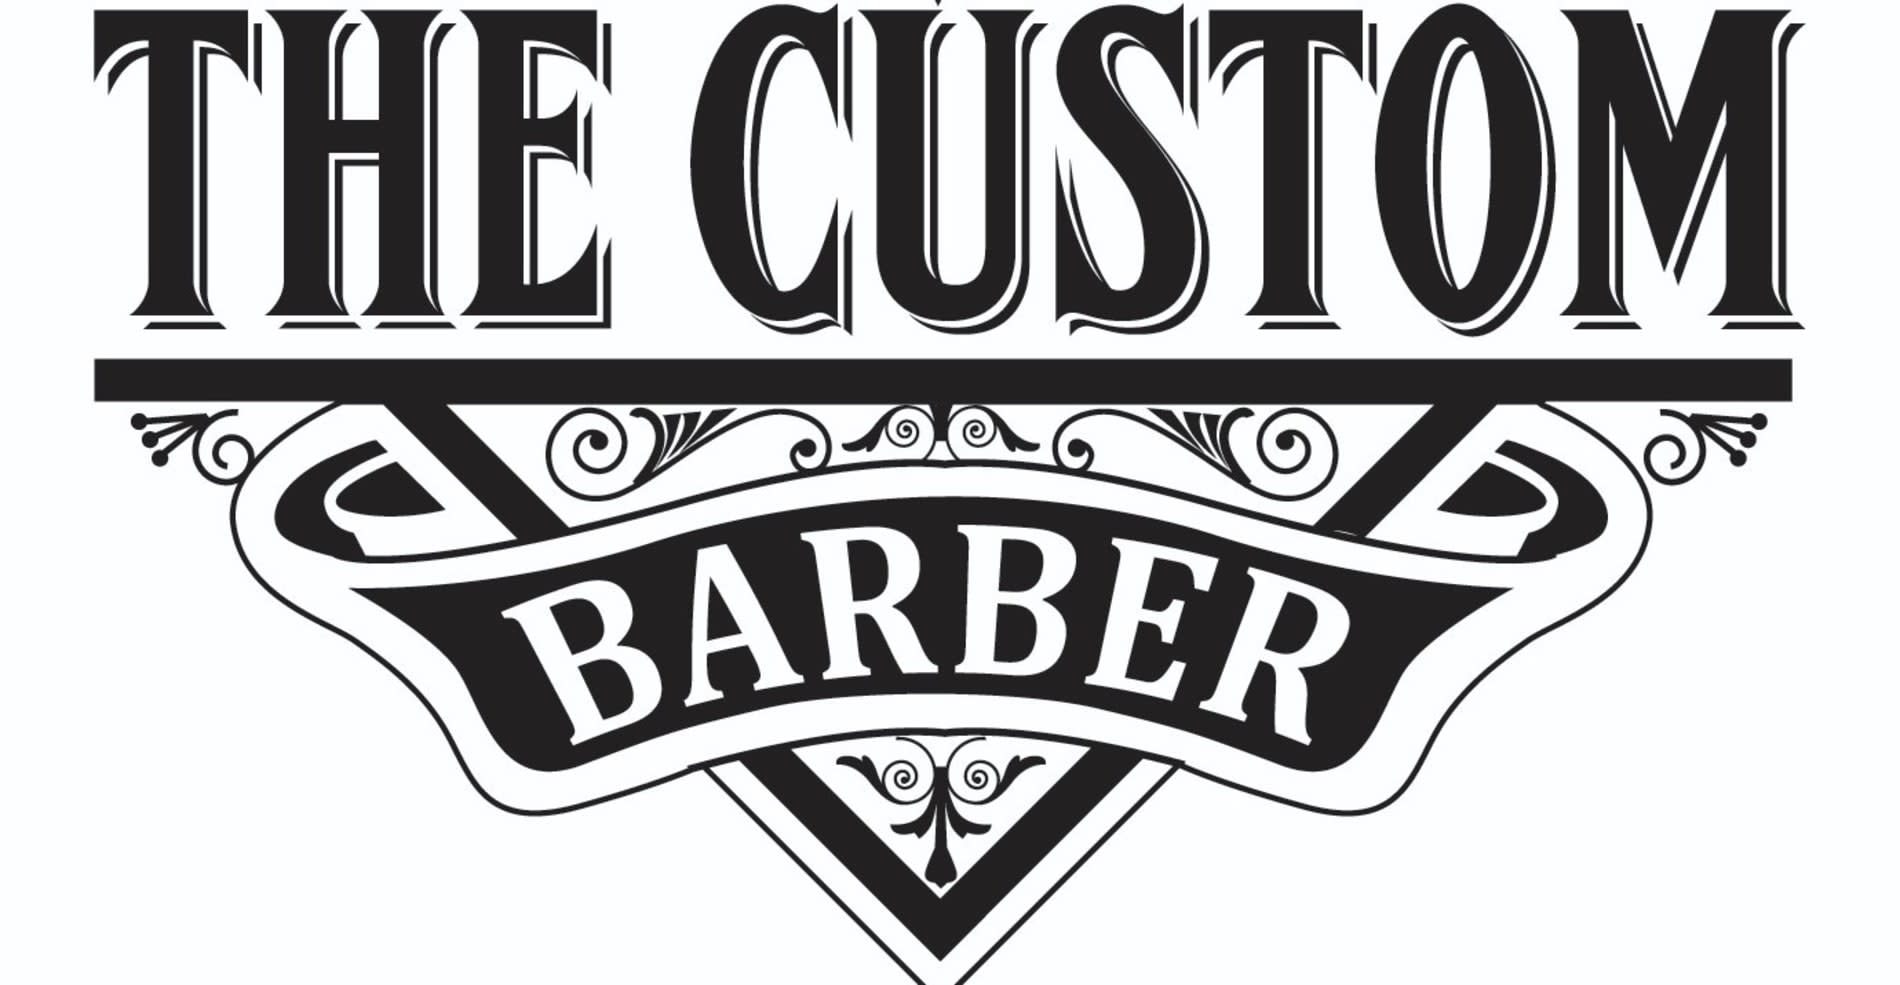 The Custom Barber